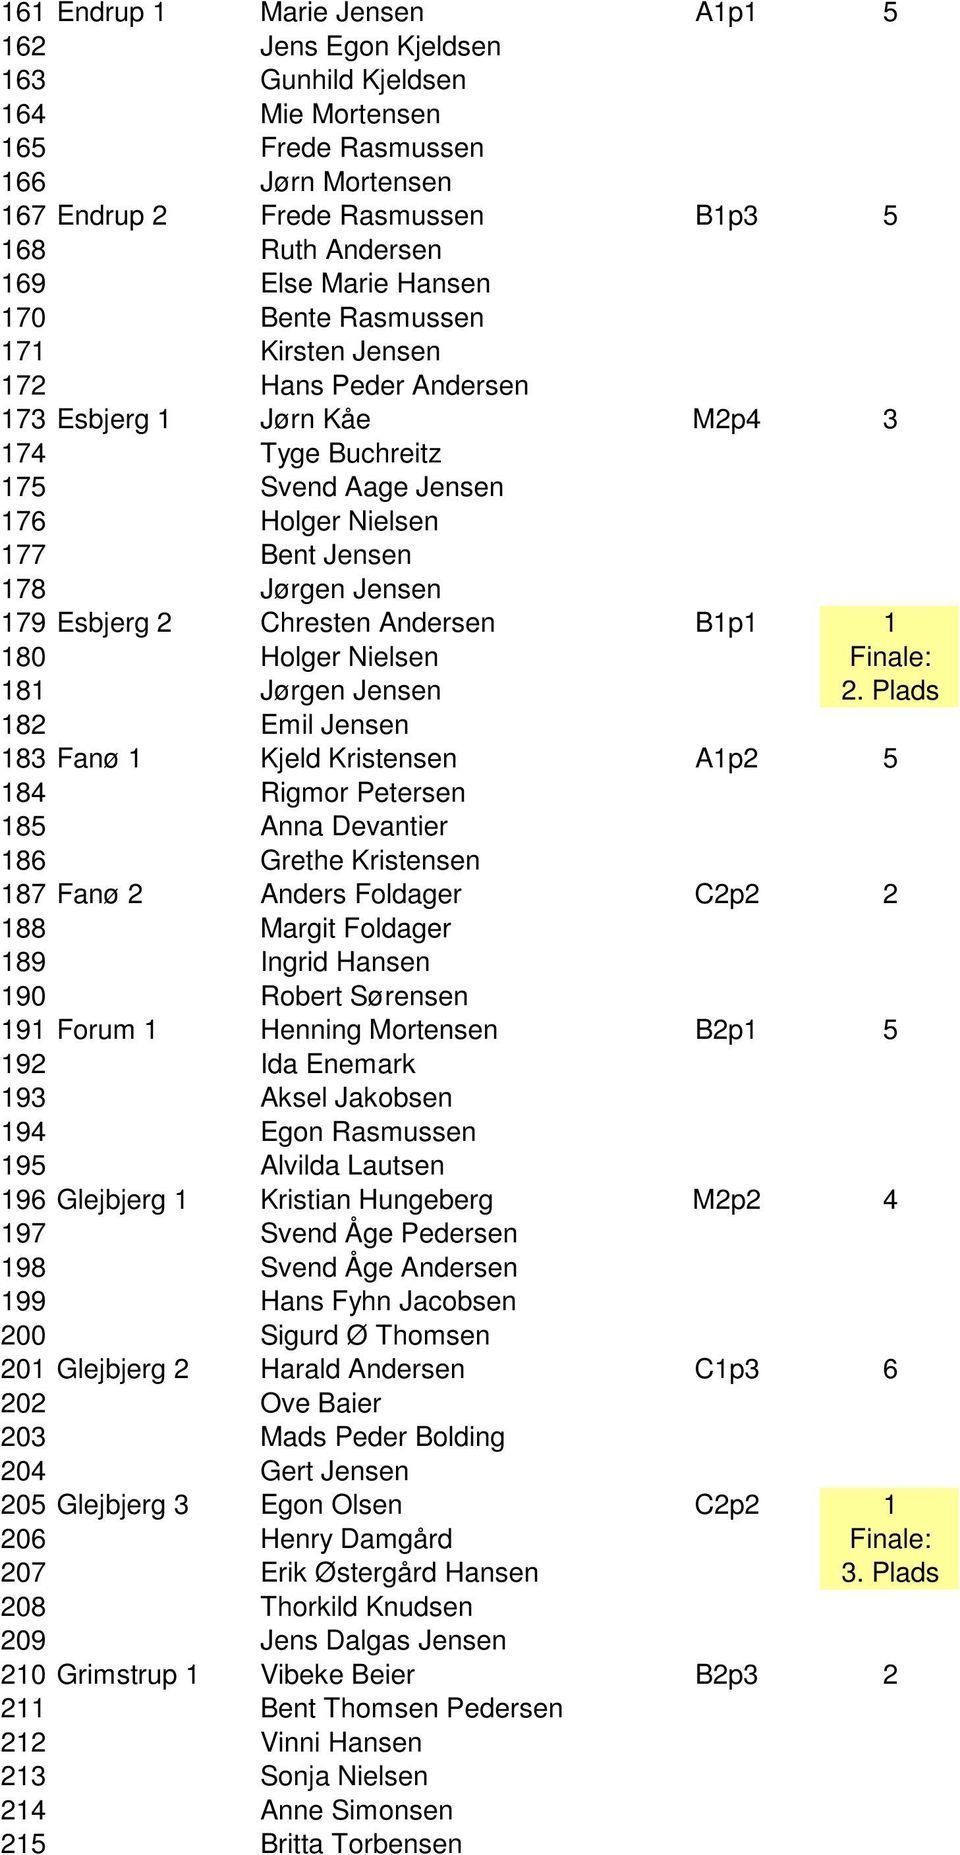 179 Esbjerg 2 Chresten Andersen B1p1 1 180 Holger Nielsen Finale: 181 Jørgen Jensen 2.